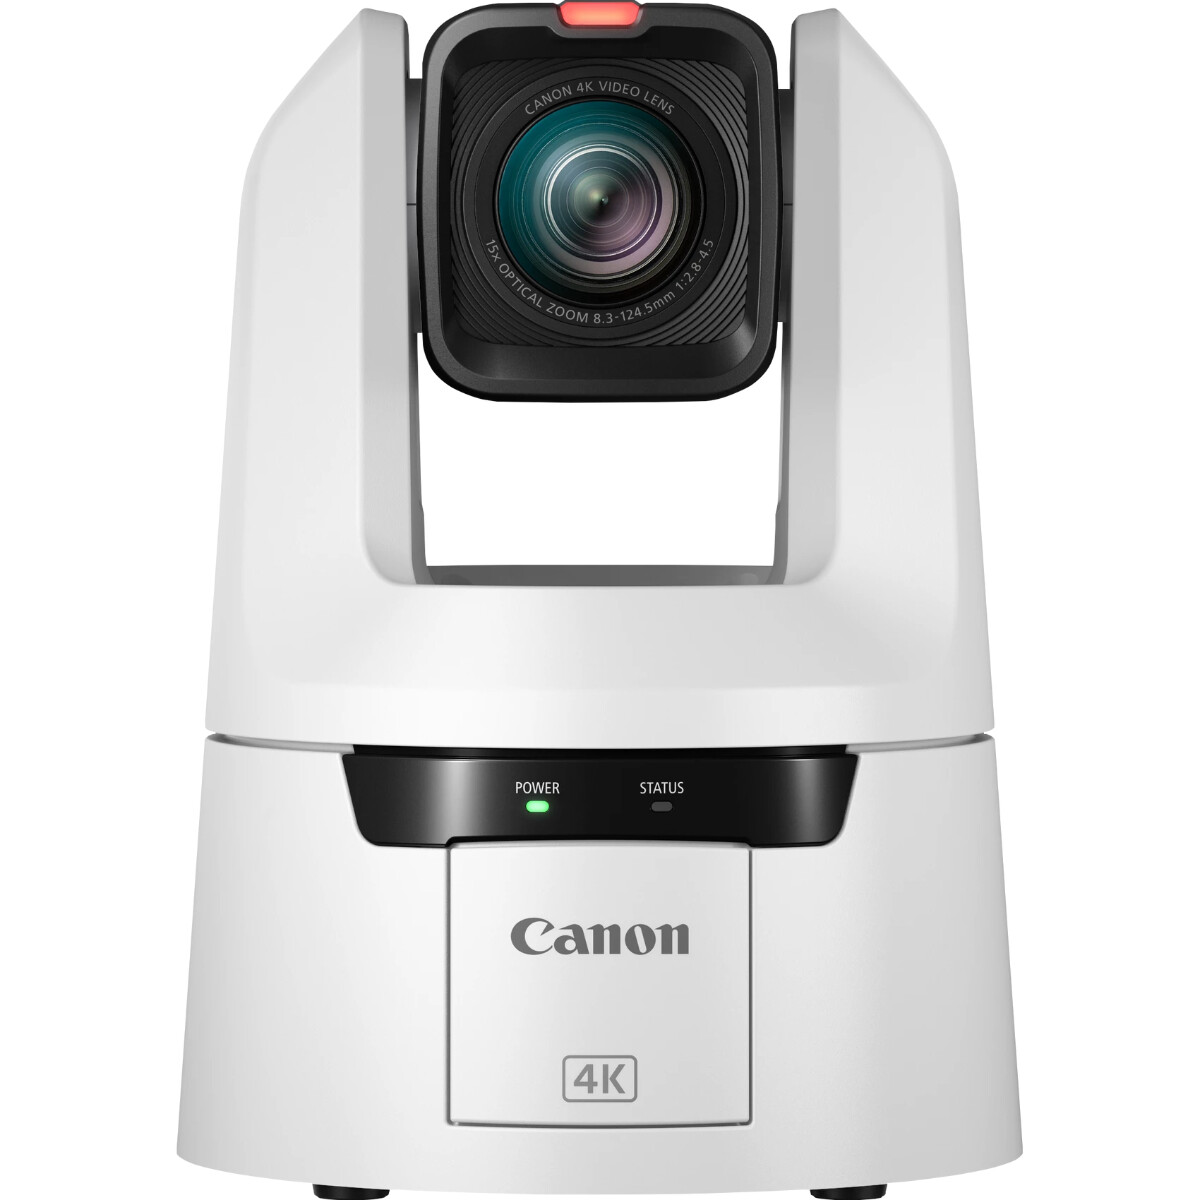 Canon-CR-N700-Broadcast-PTZ-Kamera-4K-30x-Zoom-8-29-MP-CMOS-Sensor-weiss